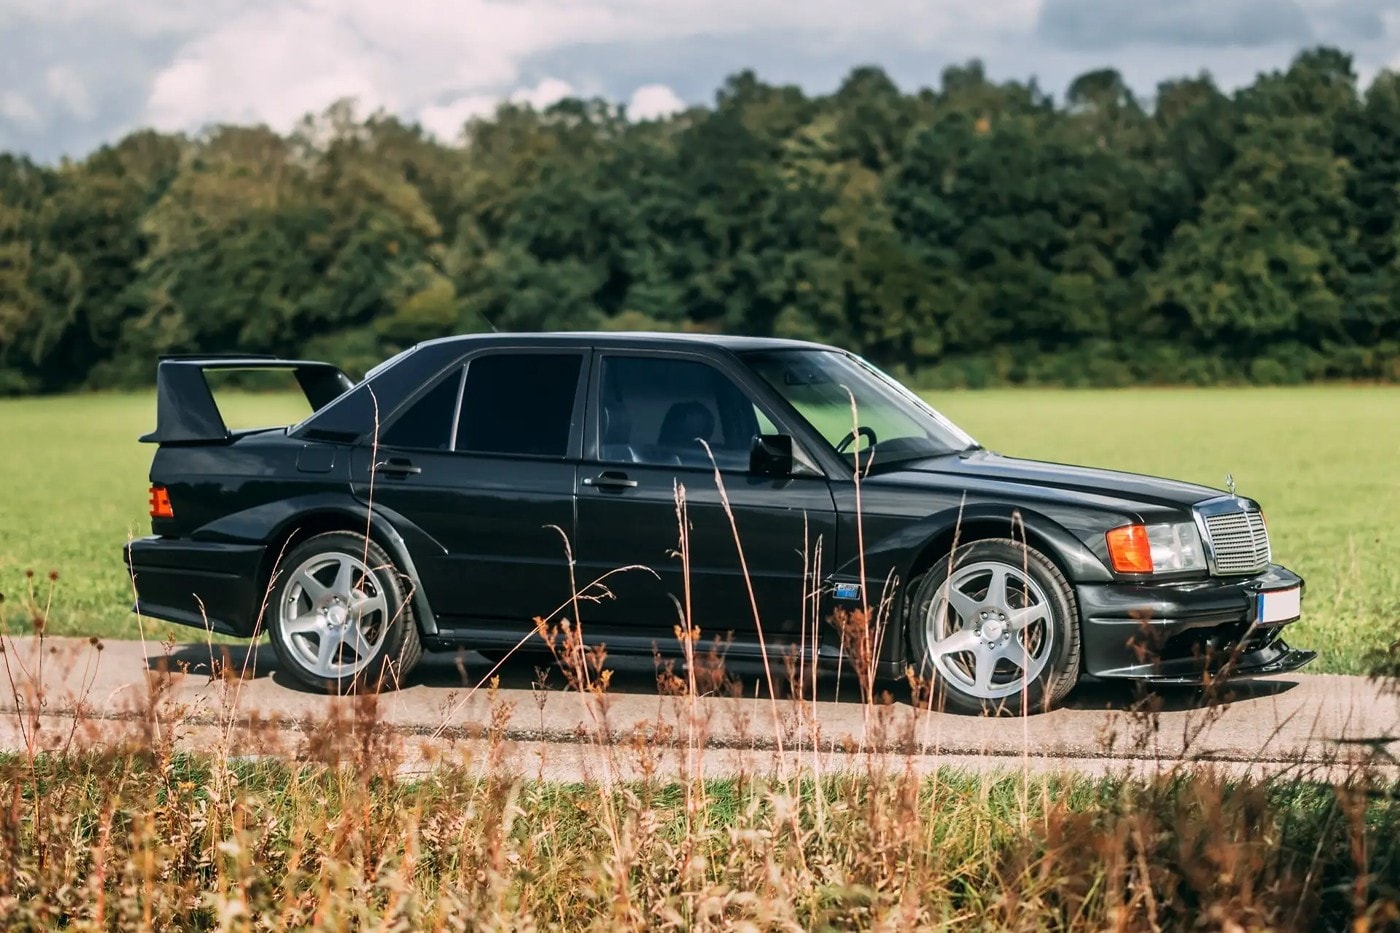 1990 年出廠 Mercedes-Benz 190E Evolution II 即將展開拍賣